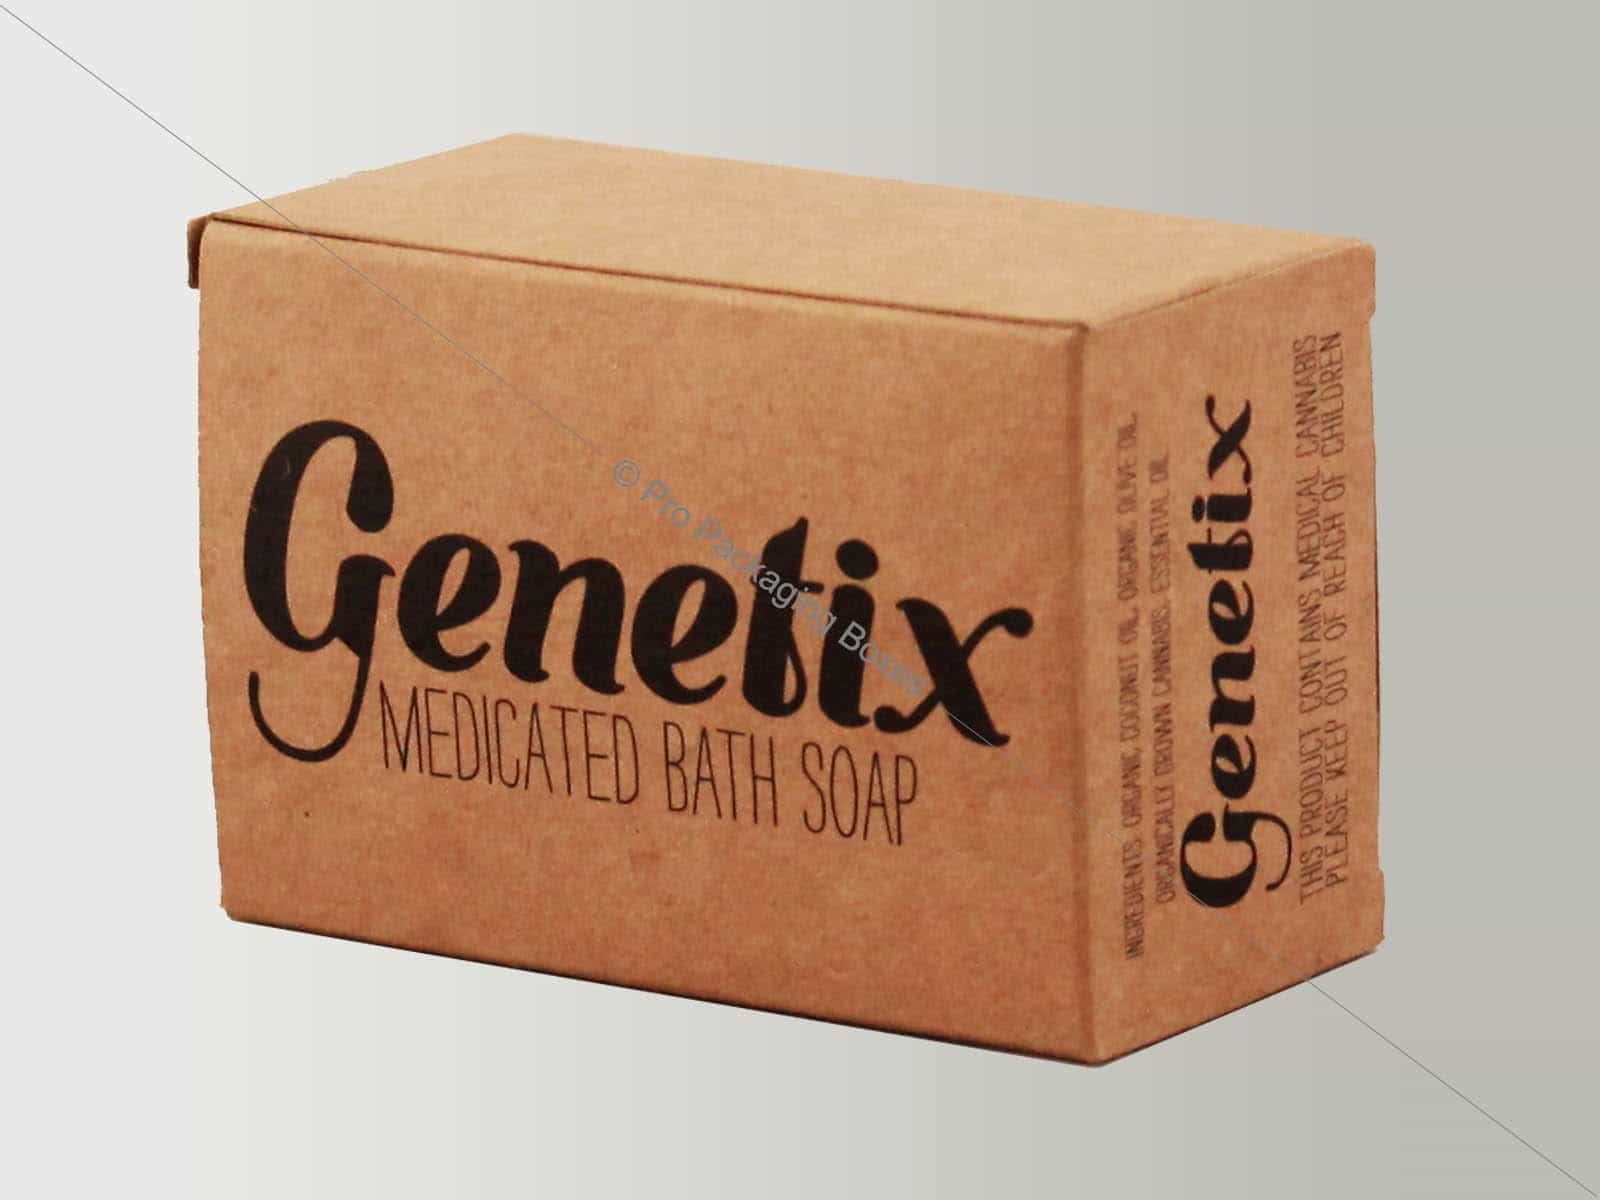 medicated hemp soap boxes